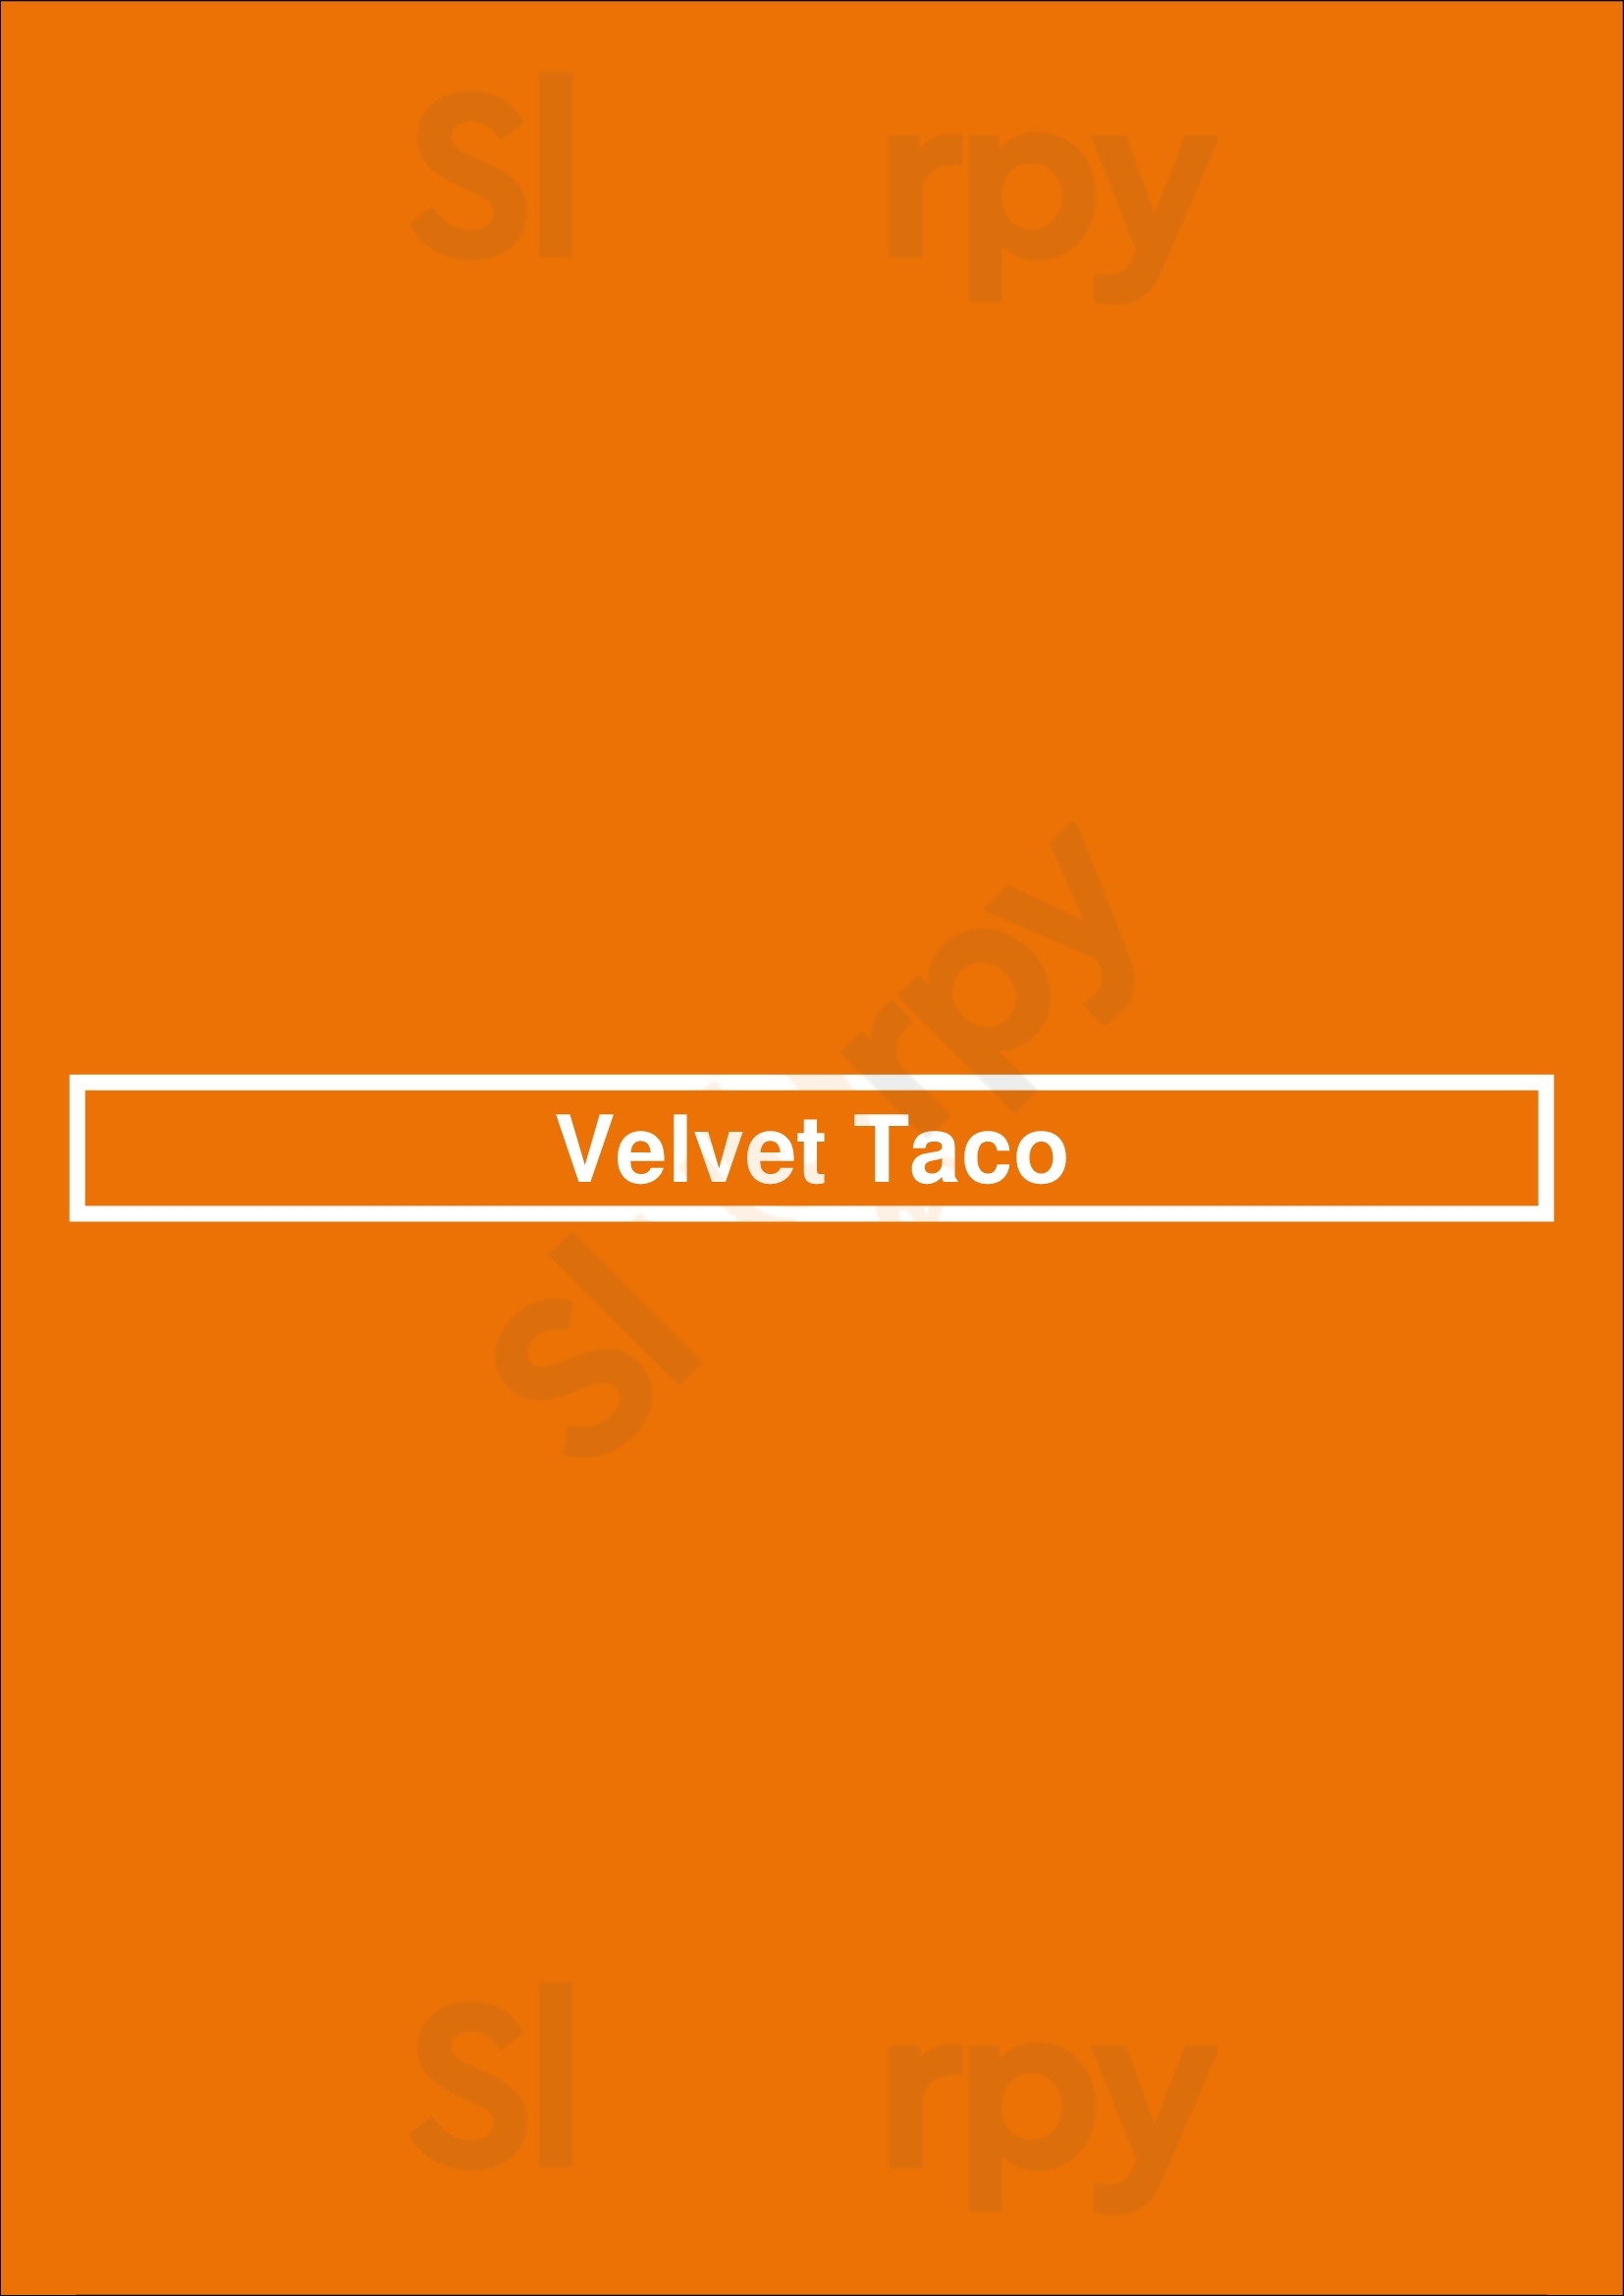 Velvet Taco Dallas Menu - 1